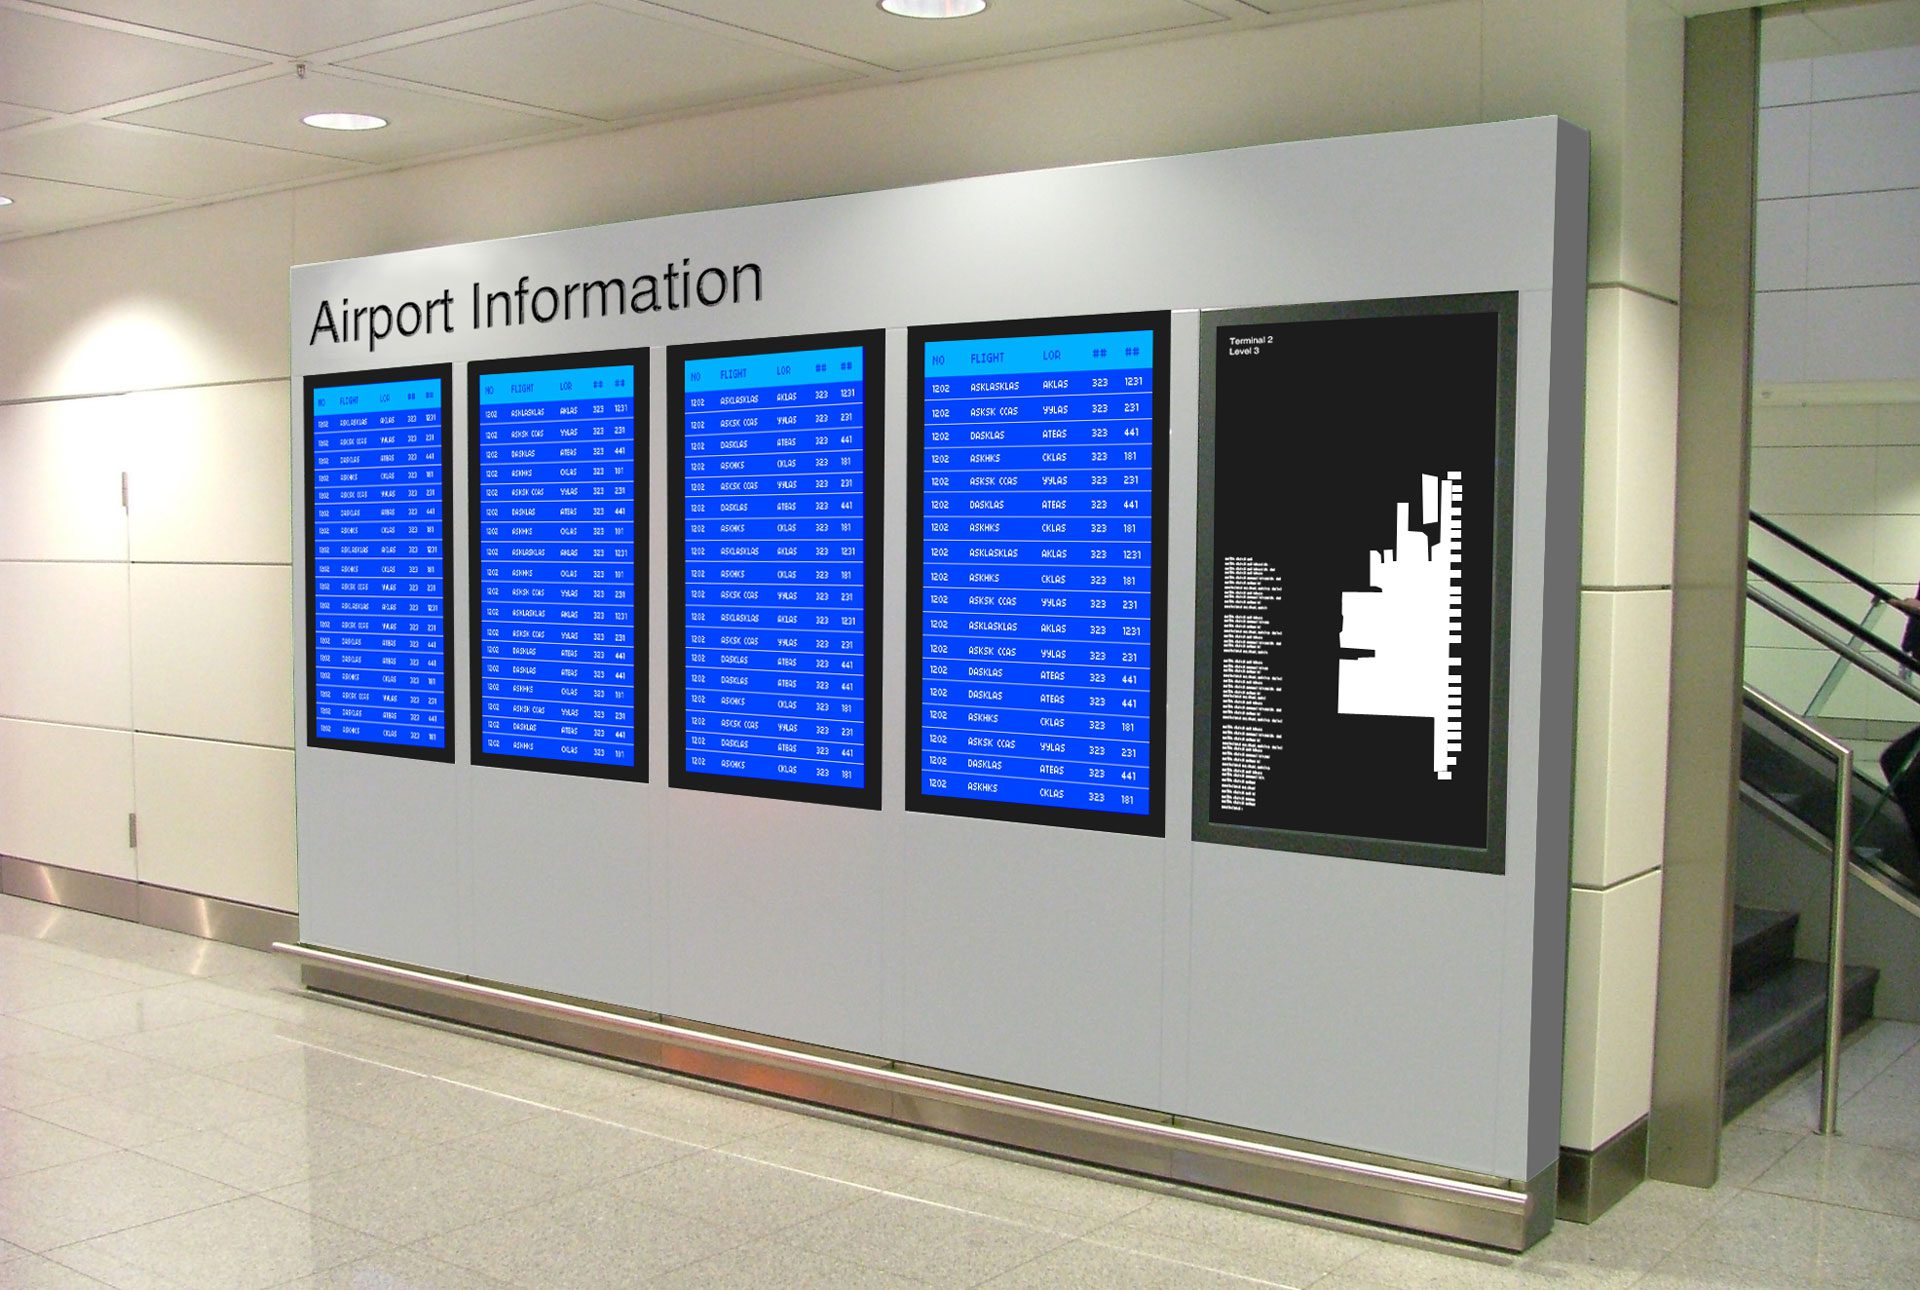 Provide information via airport digital signage displays